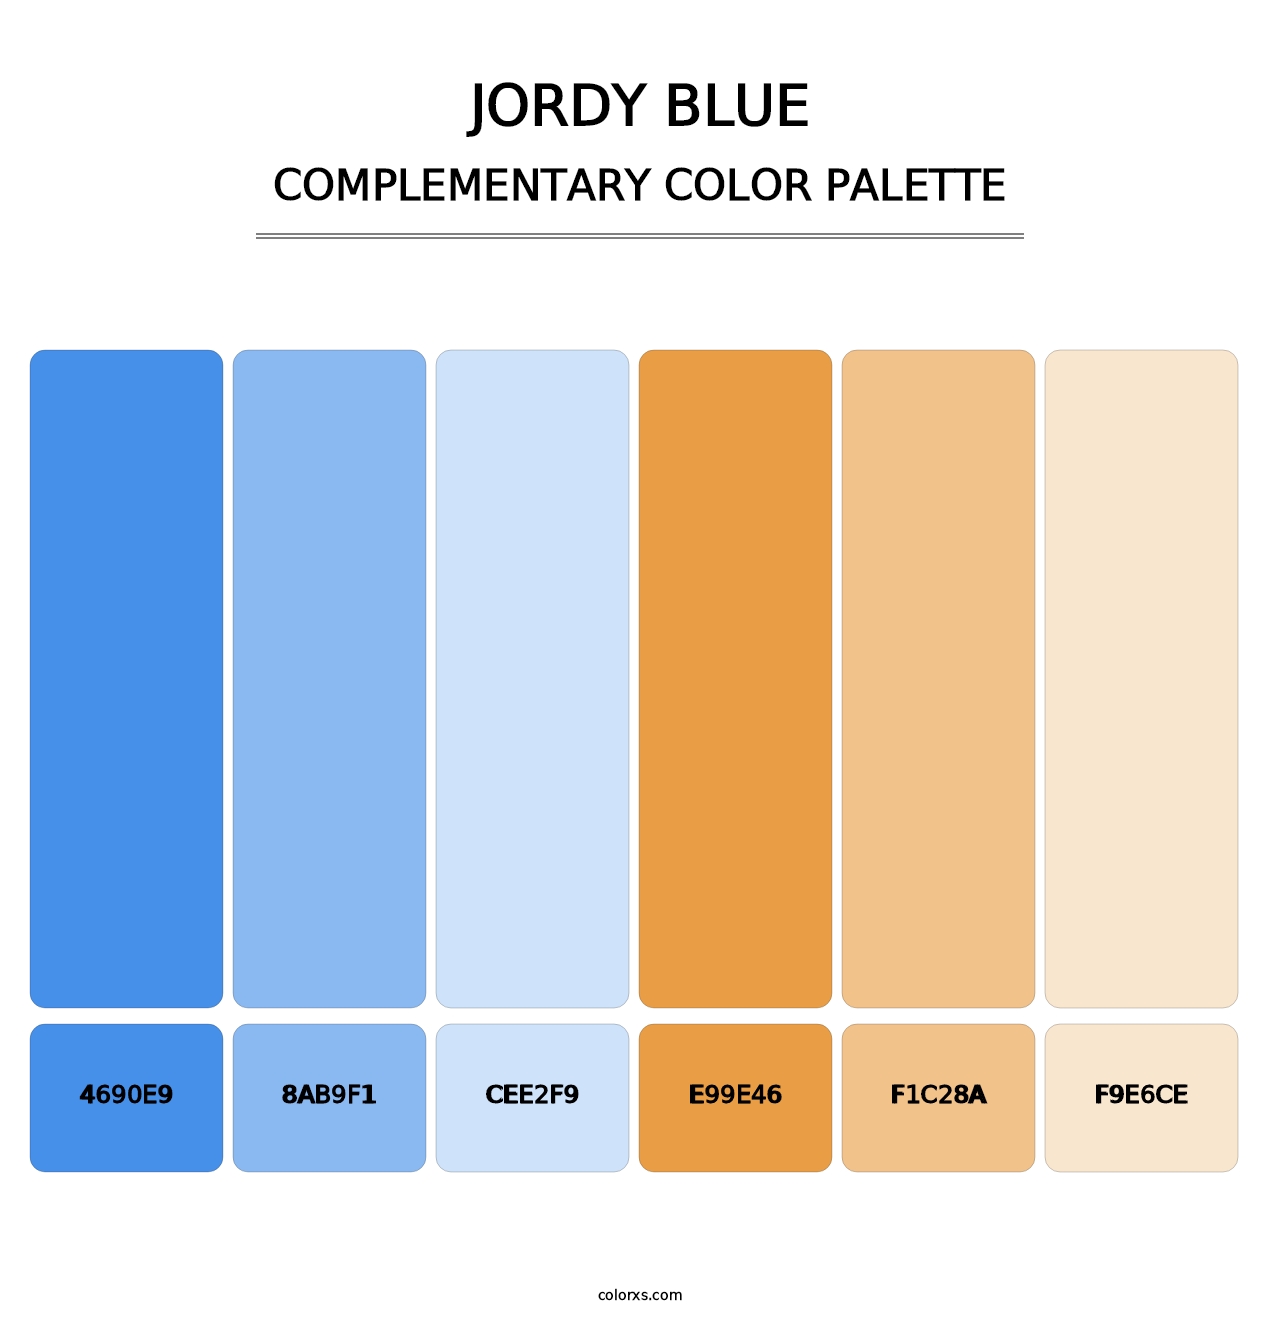 Jordy Blue - Complementary Color Palette